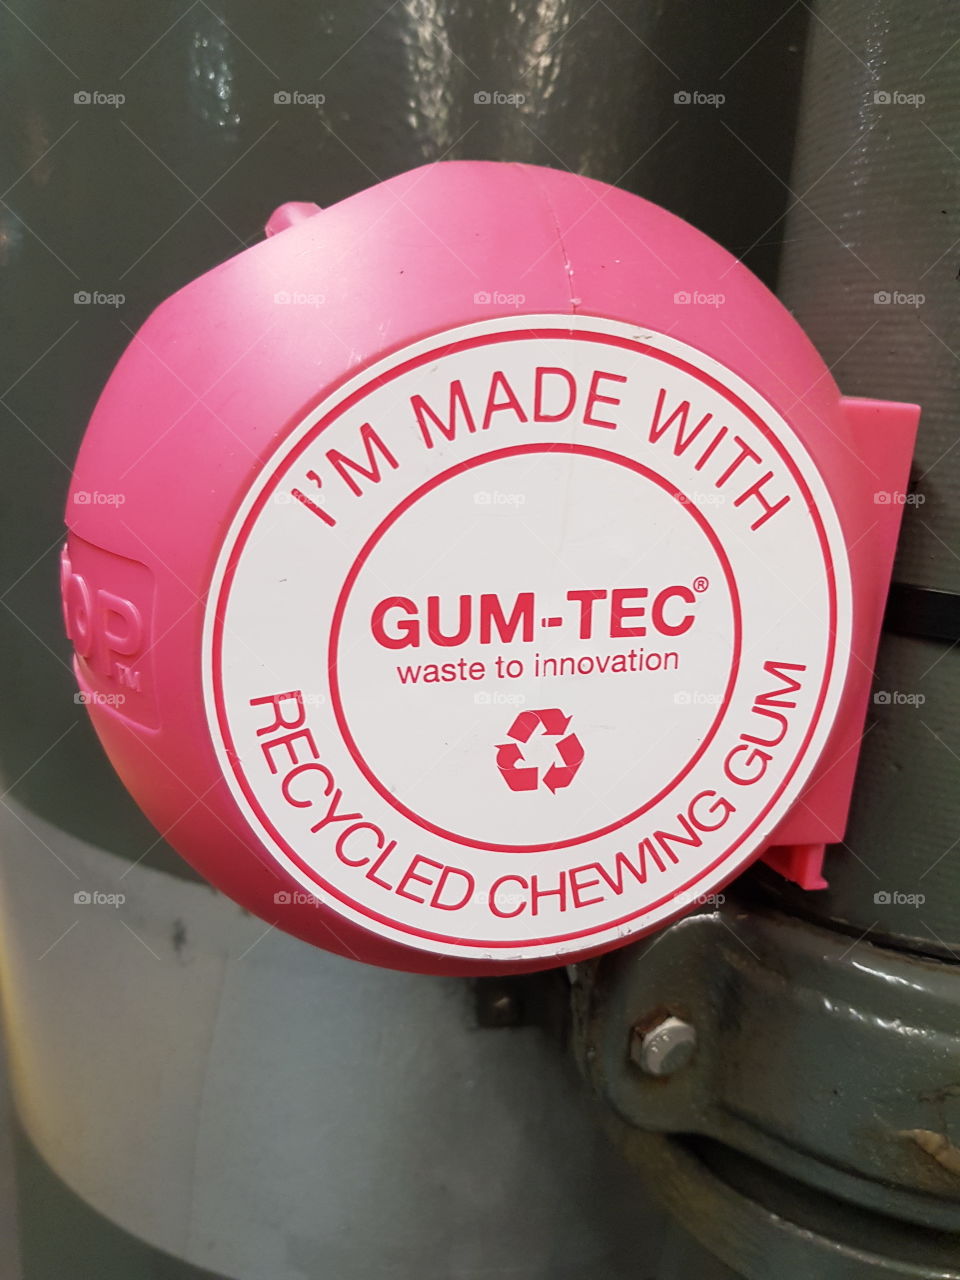 Gum-tech chewing gum recycling